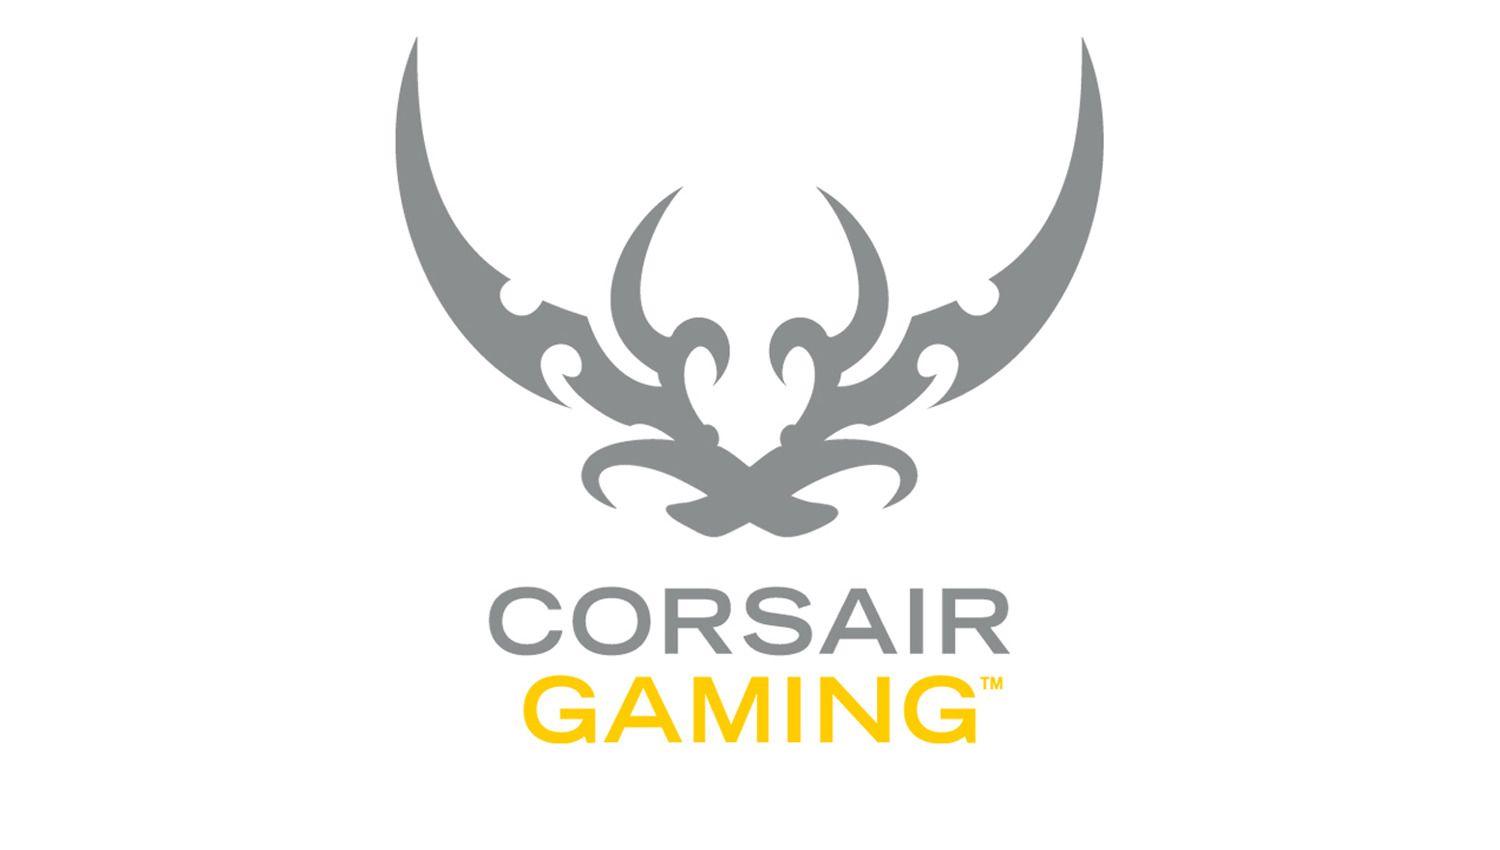 Sleek Gaming Logo - Corsair returns to 'Sails' logo, scuttles the hated swords